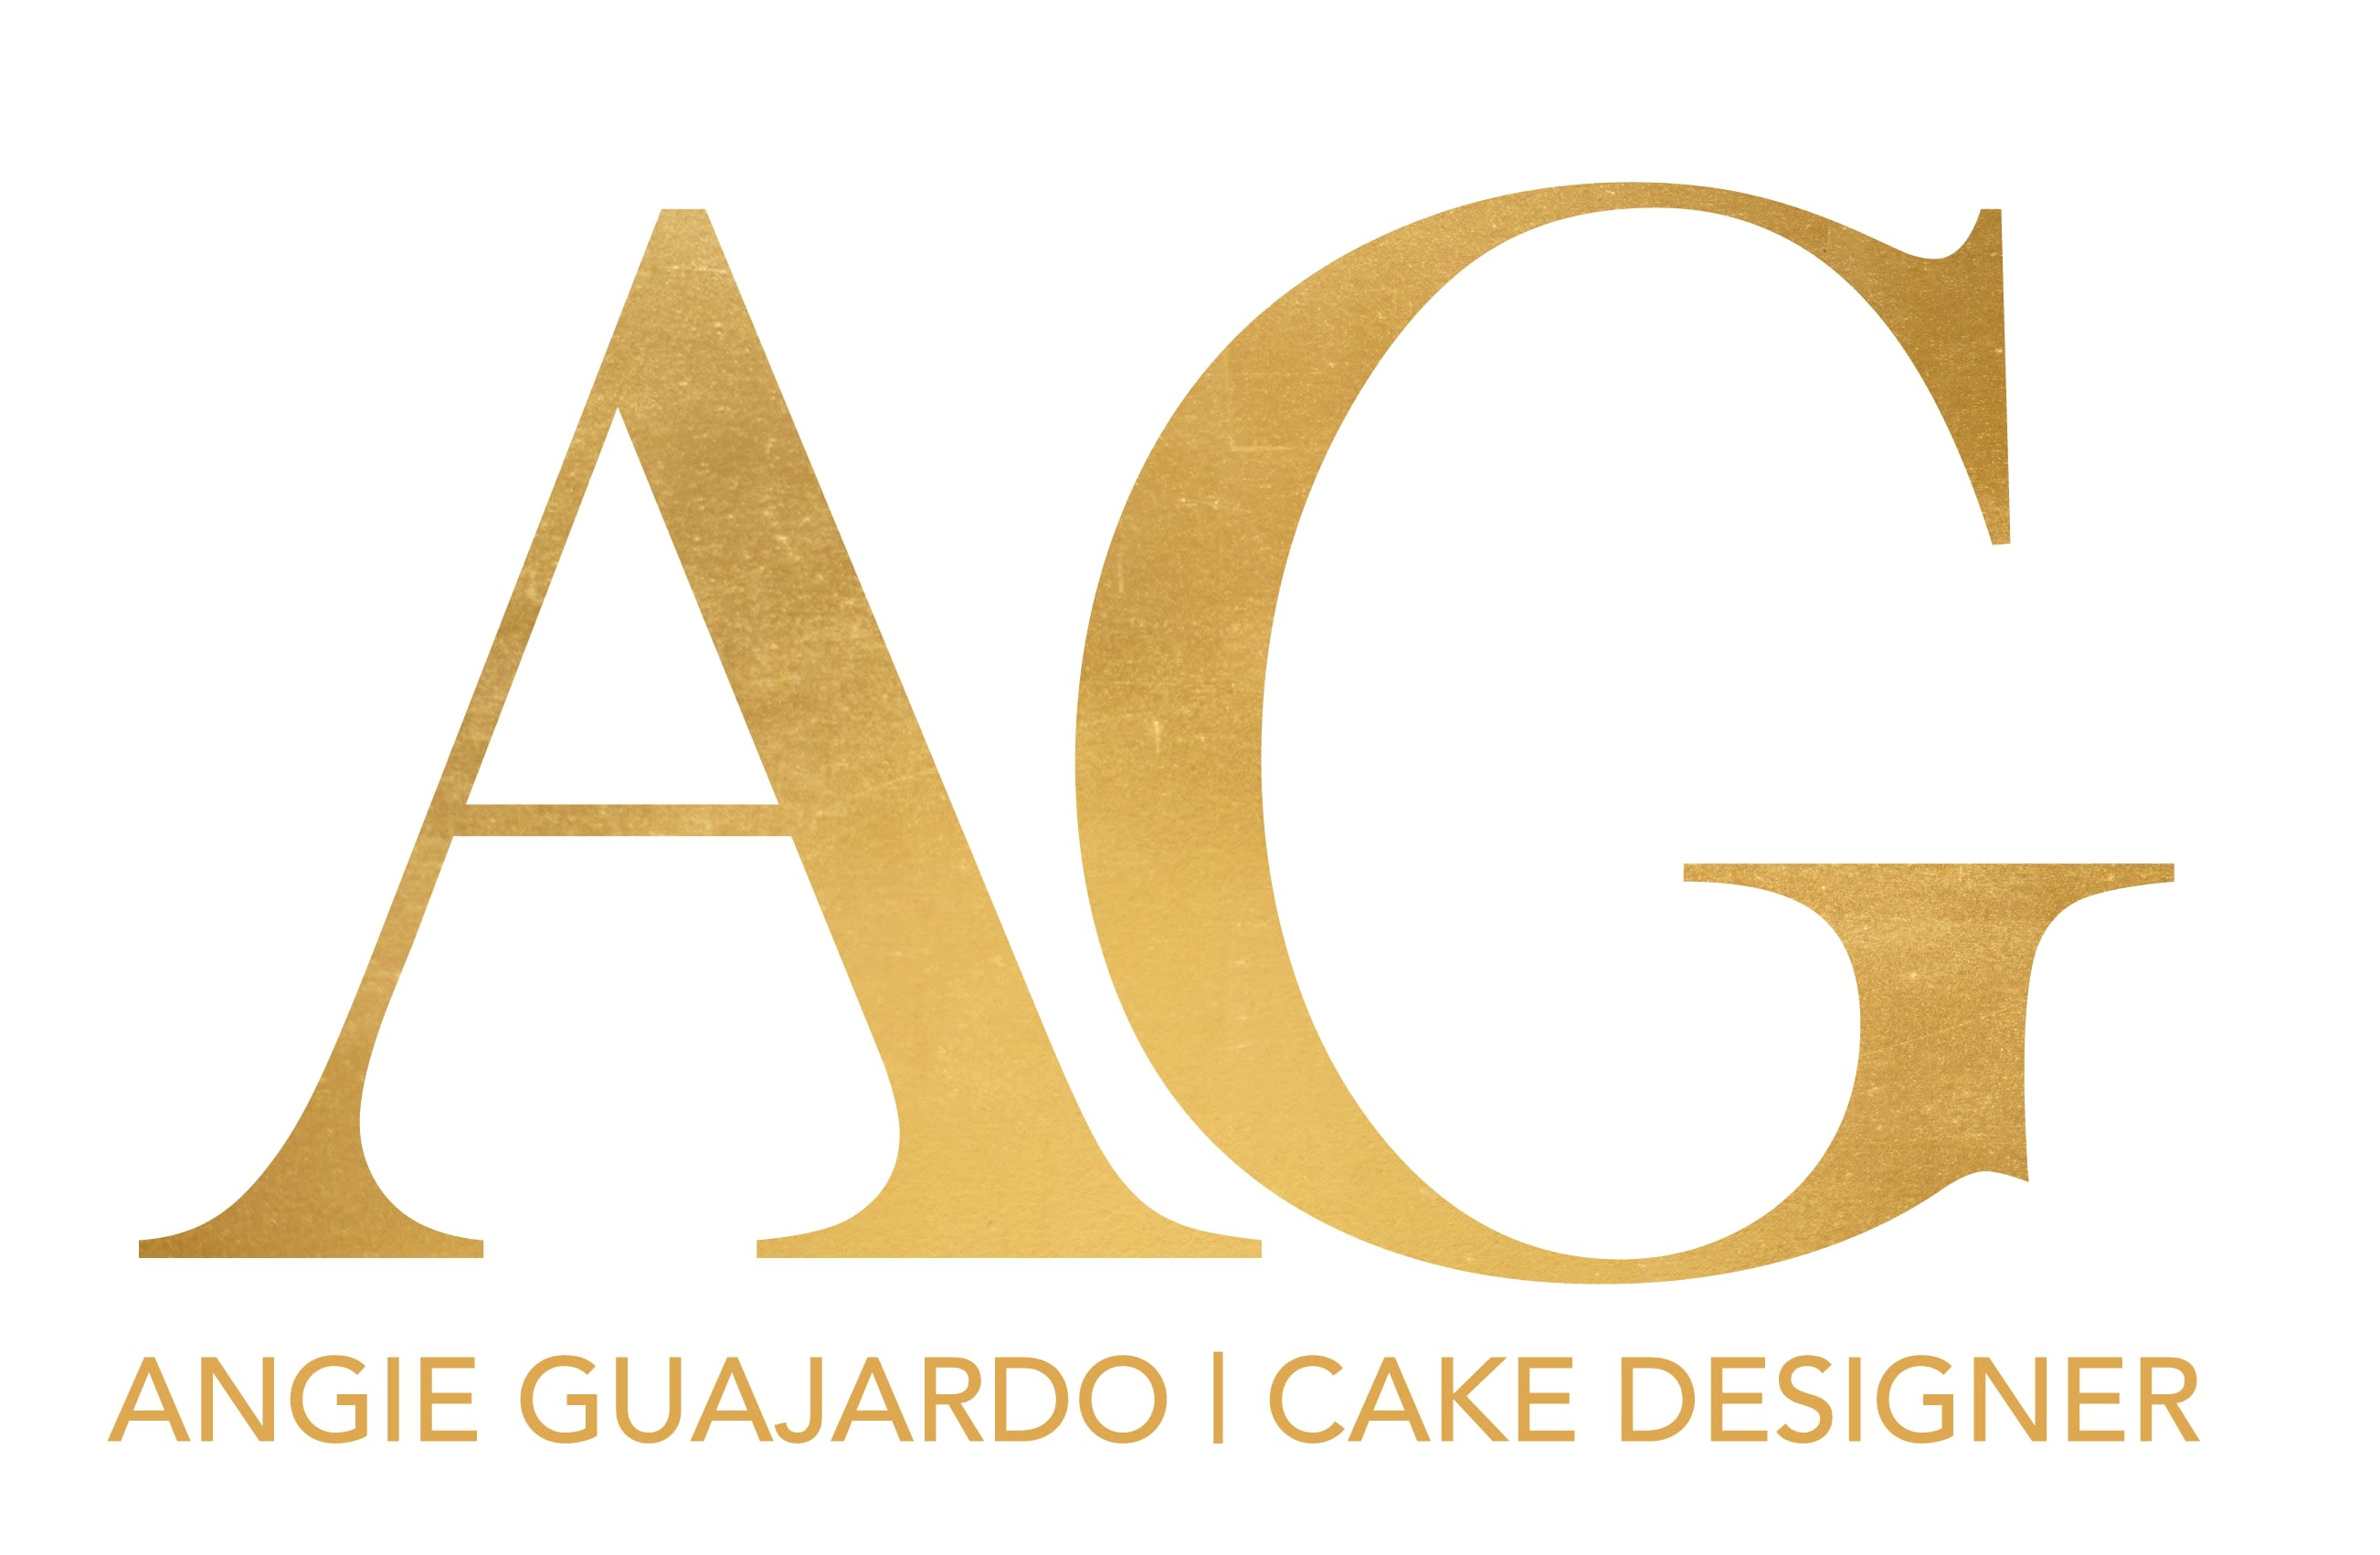 Angie Guajardo Cake Designer